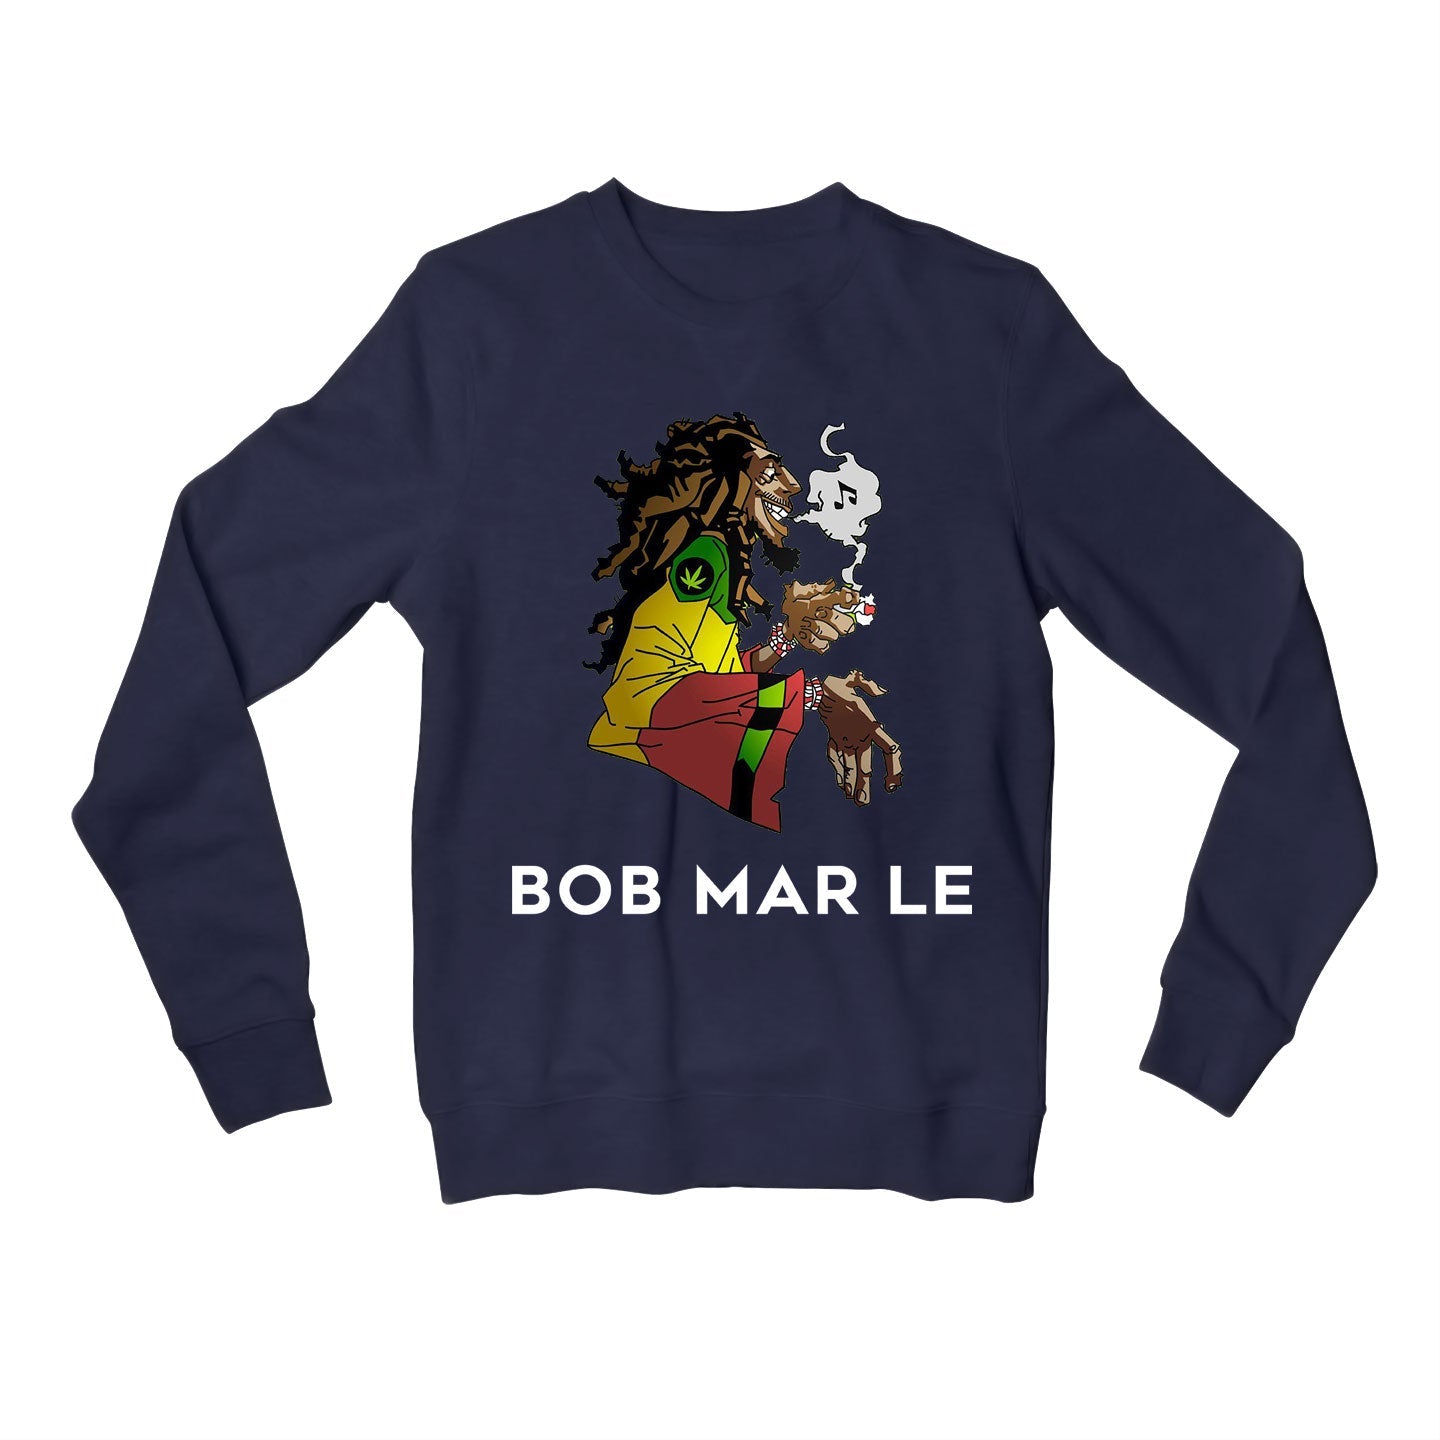 bob marley mar le sweatshirt upper winterwear music band buy online india the banyan tee tbt men women girls boys unisex navy blue